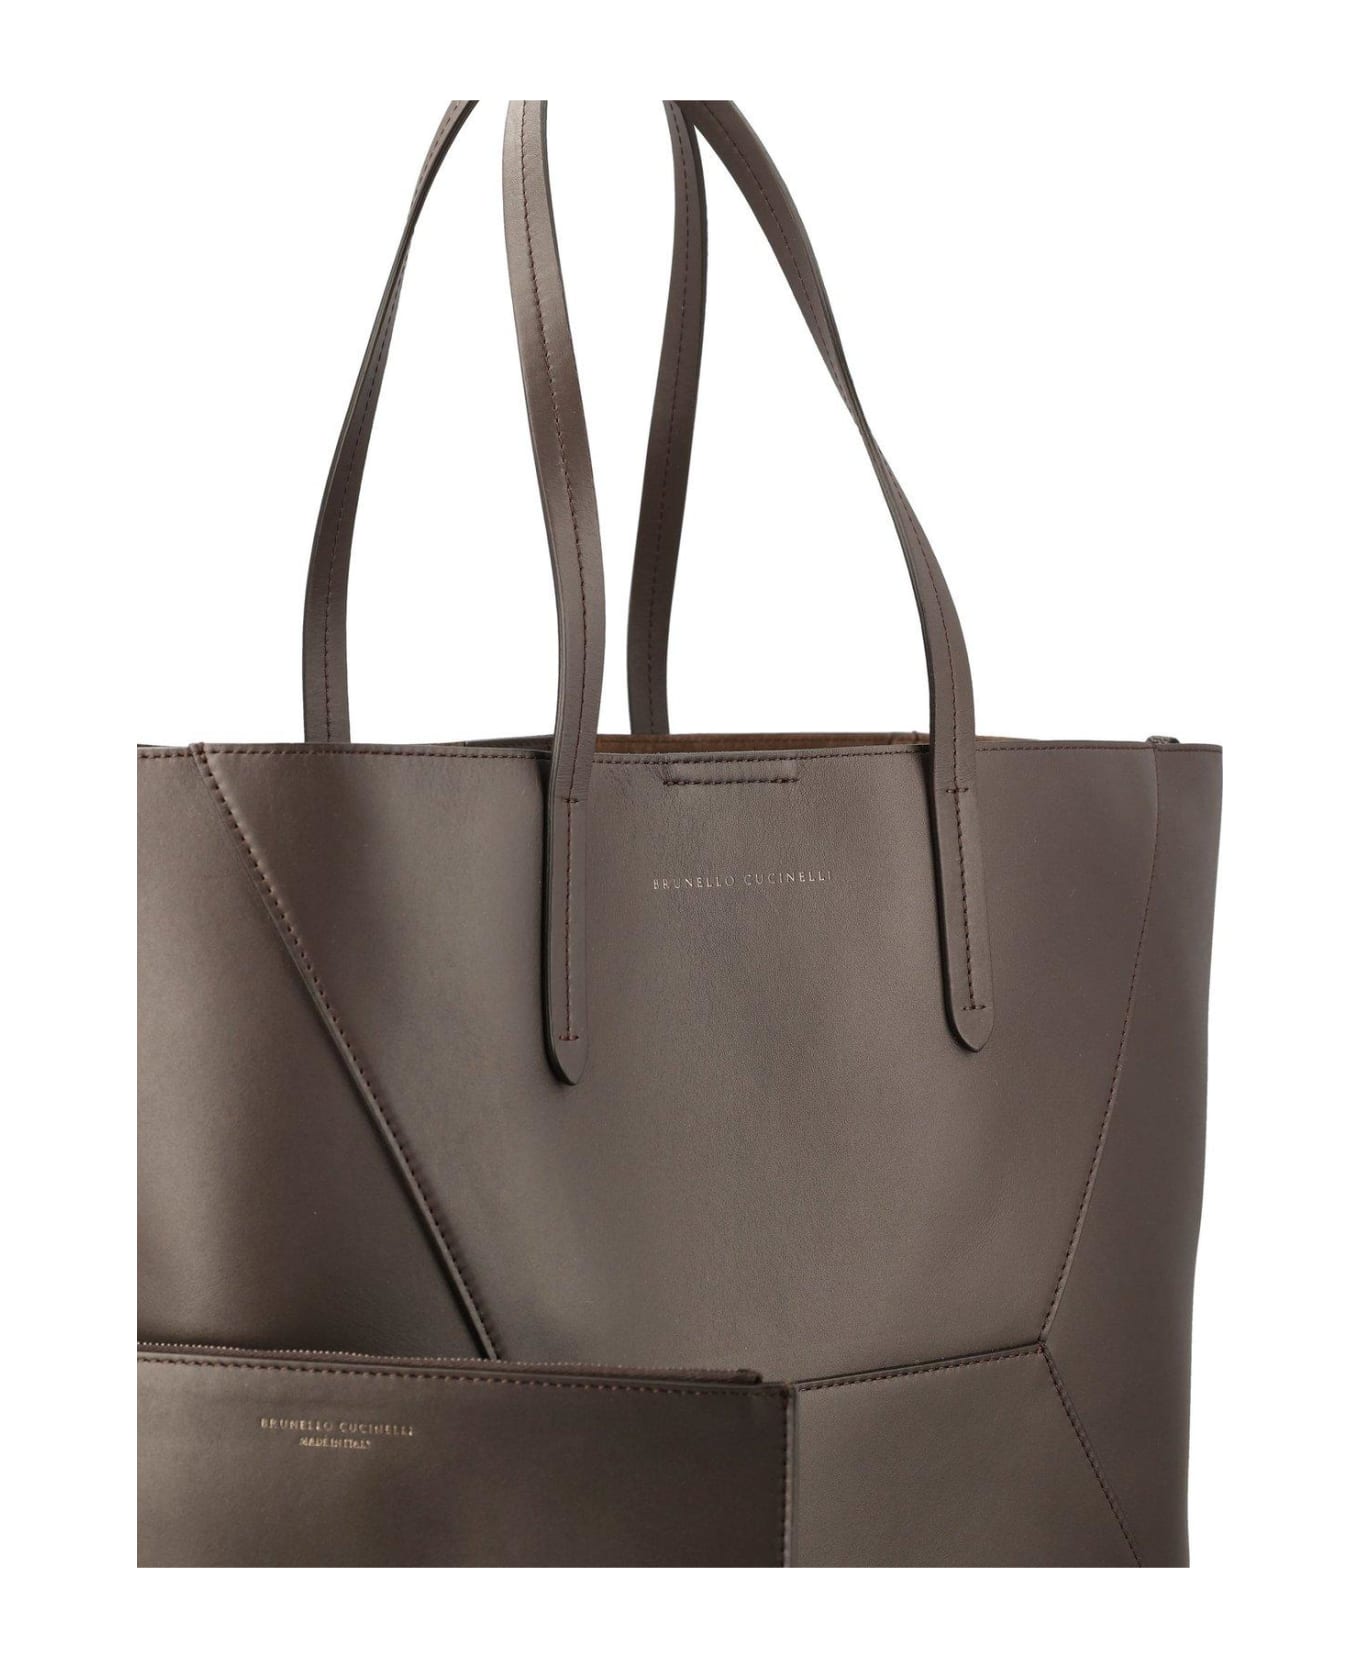 Brunello Cucinelli Leather Tote Bag - Dark トートバッグ